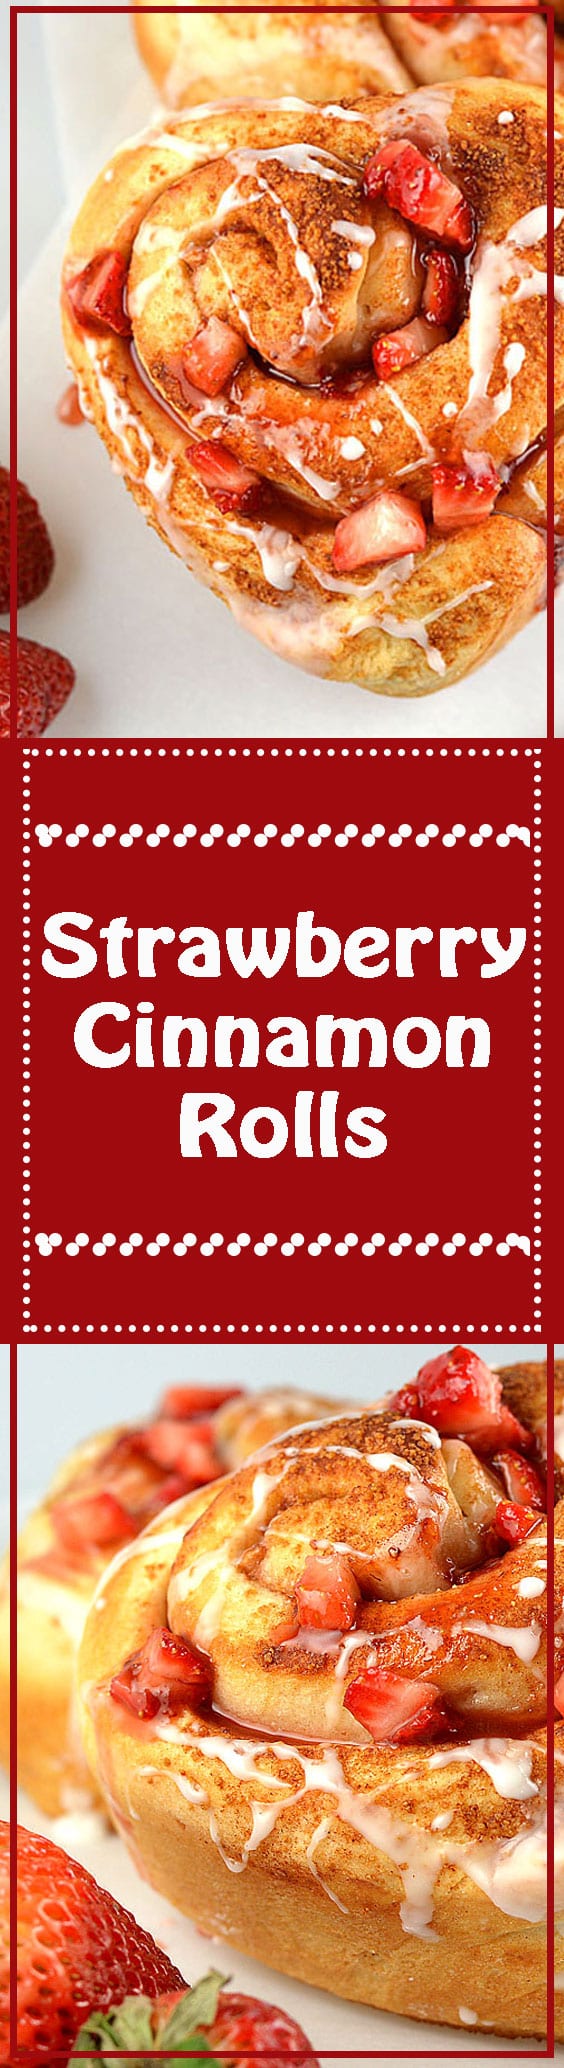 Strawberry Cinnamon Rolls